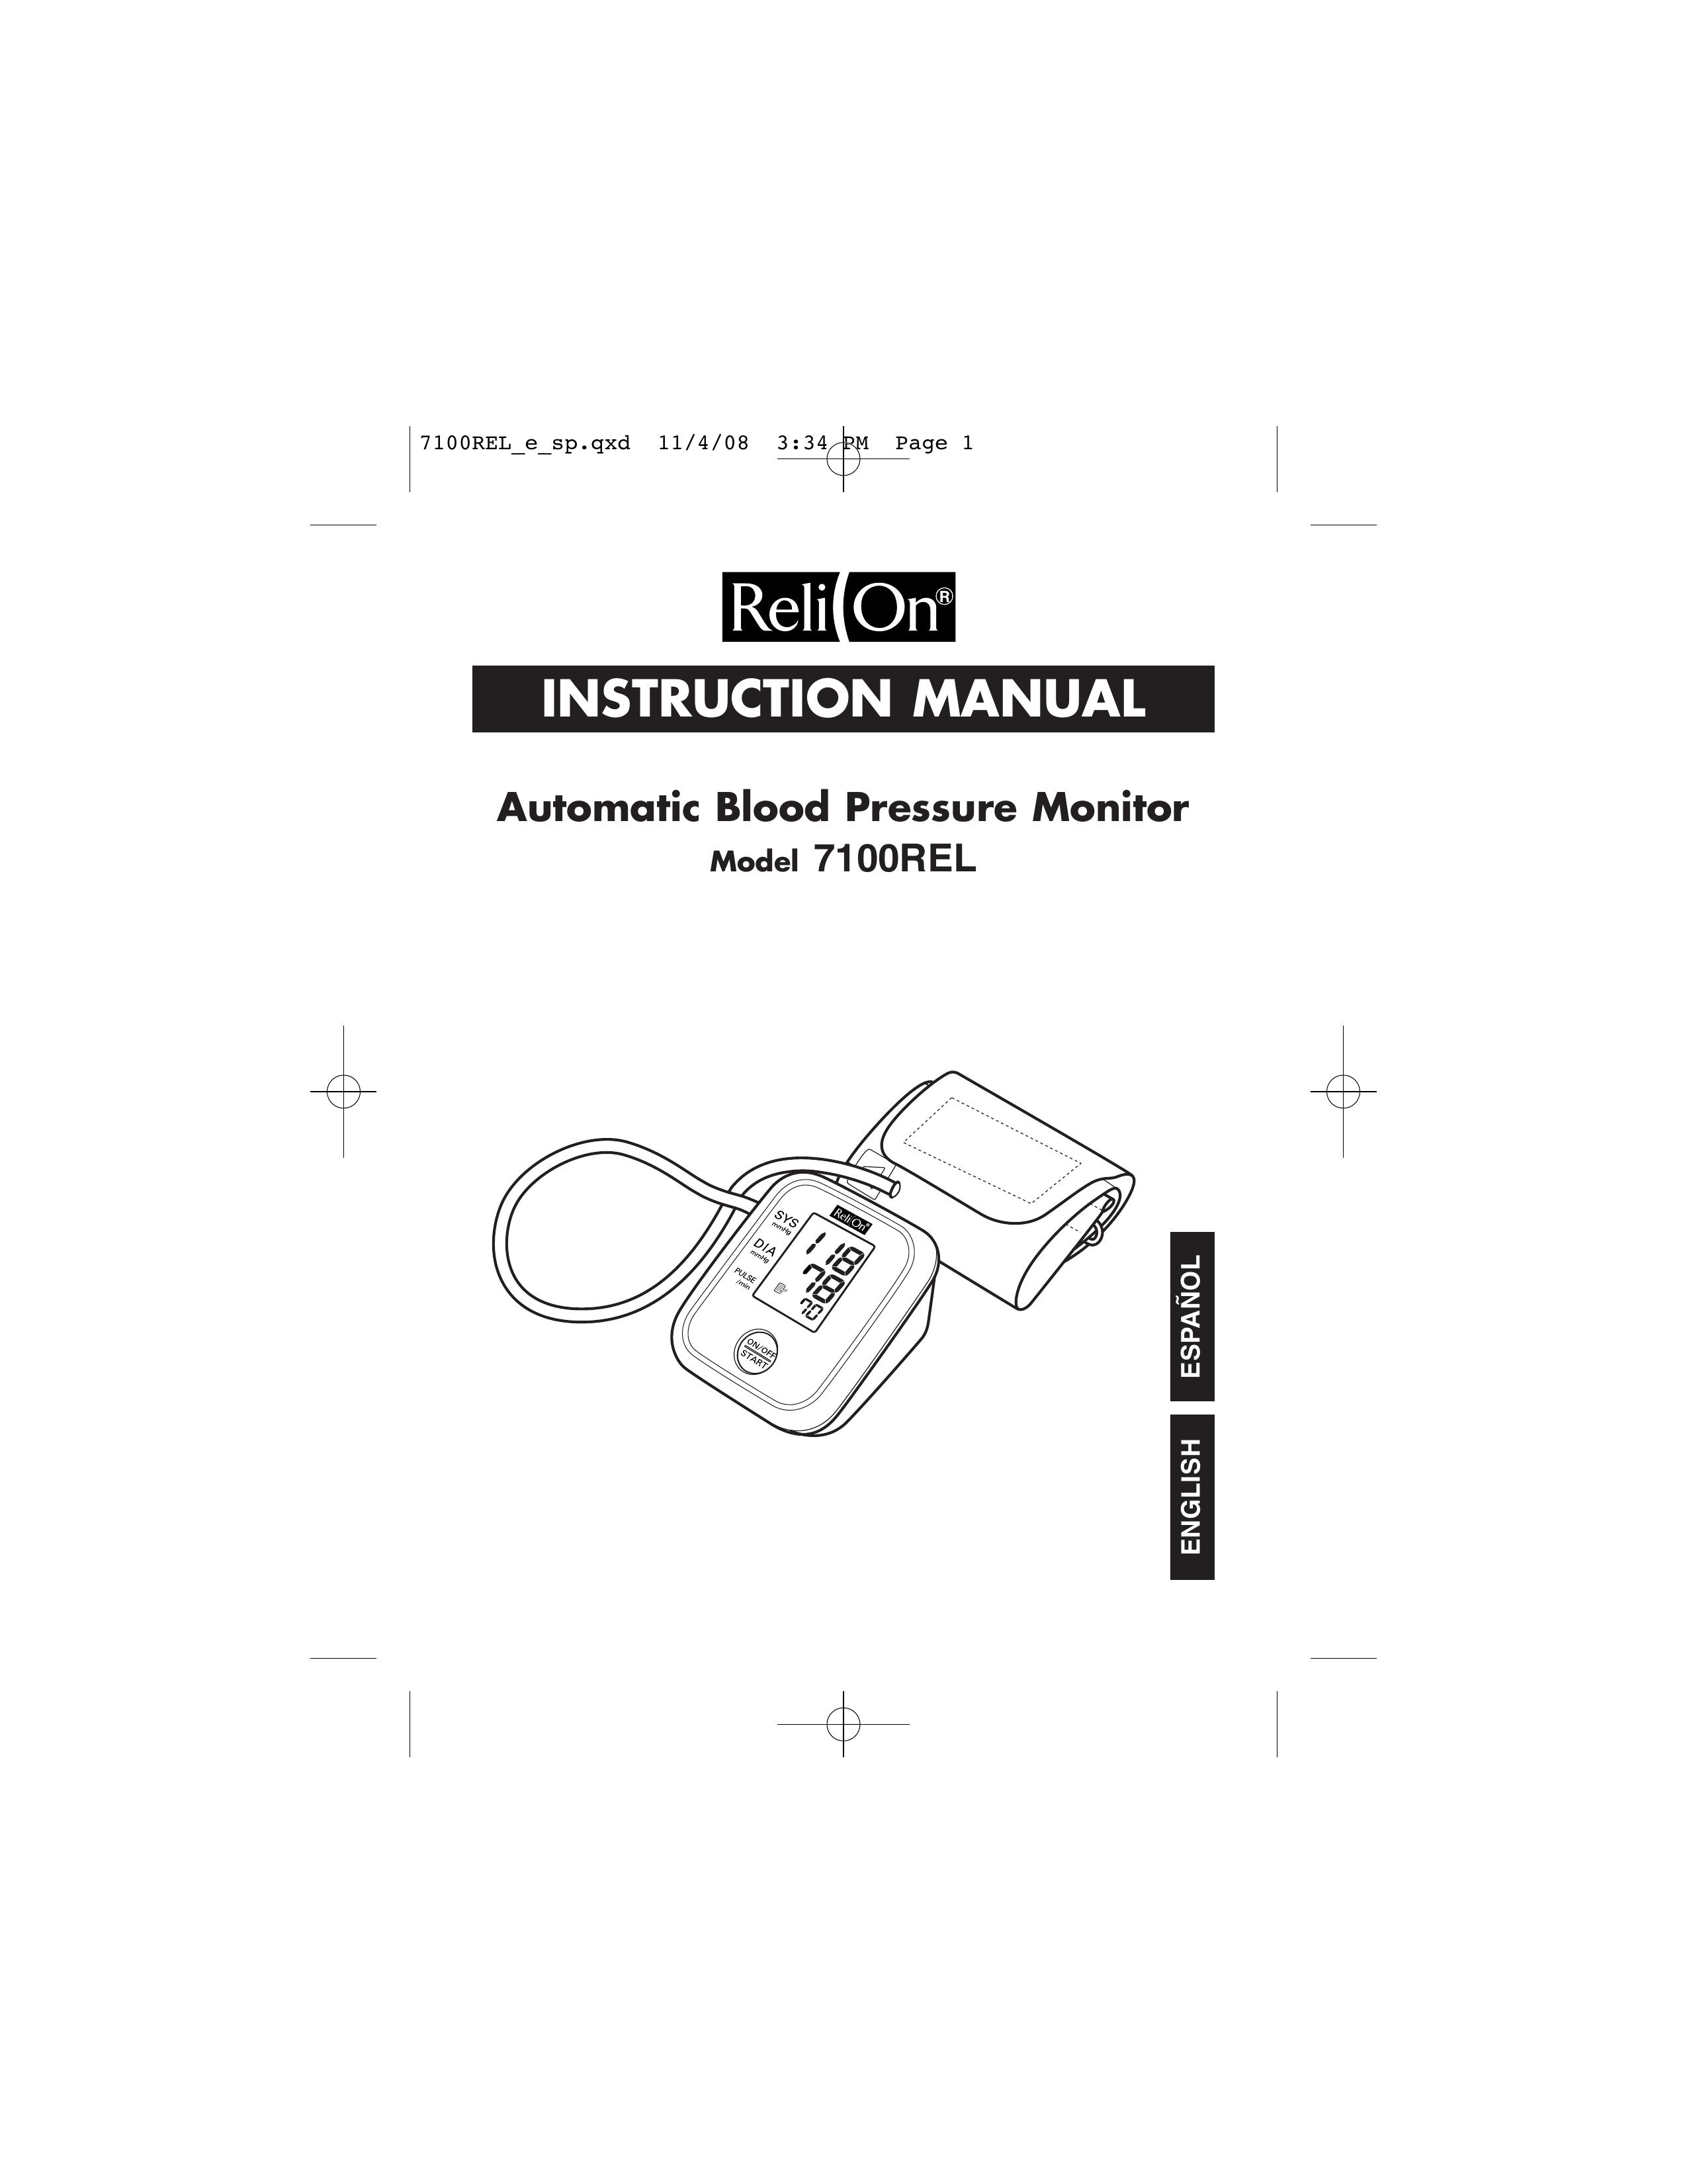 ReliOn 7100REL Blood Pressure Monitor User Manual